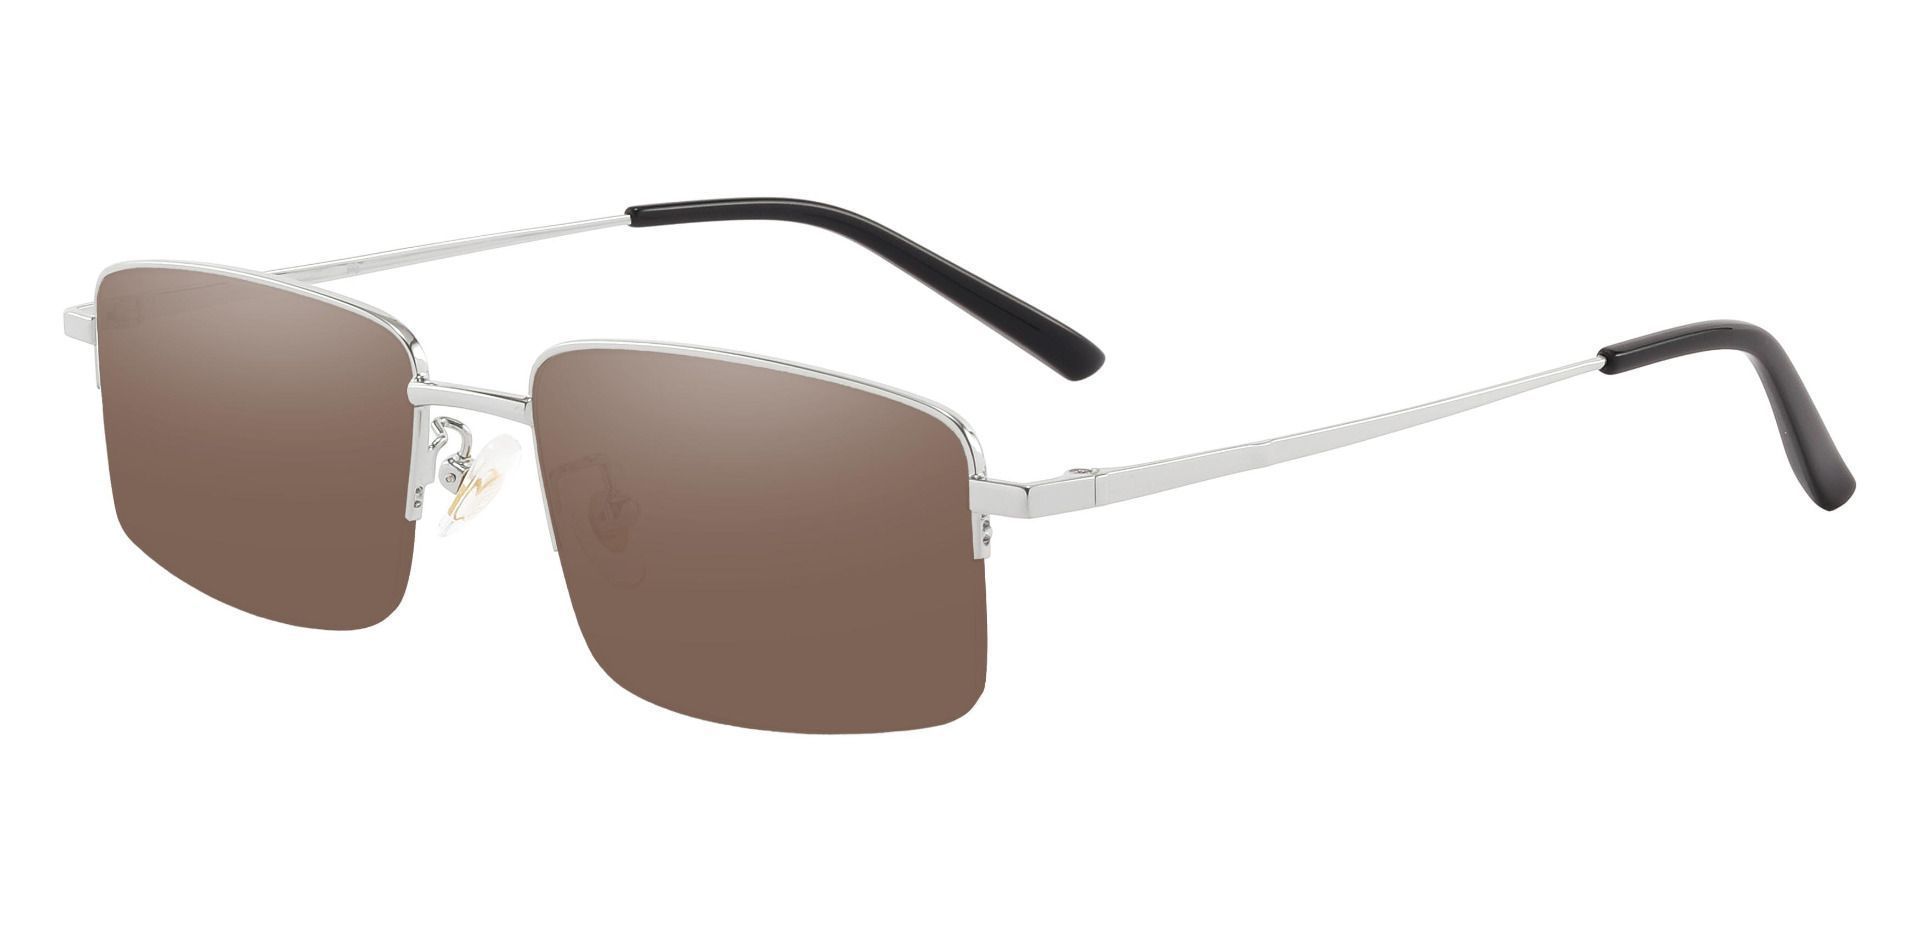 Wayne Rectangle Prescription Sunglasses - Silver Frame With Brown Lenses